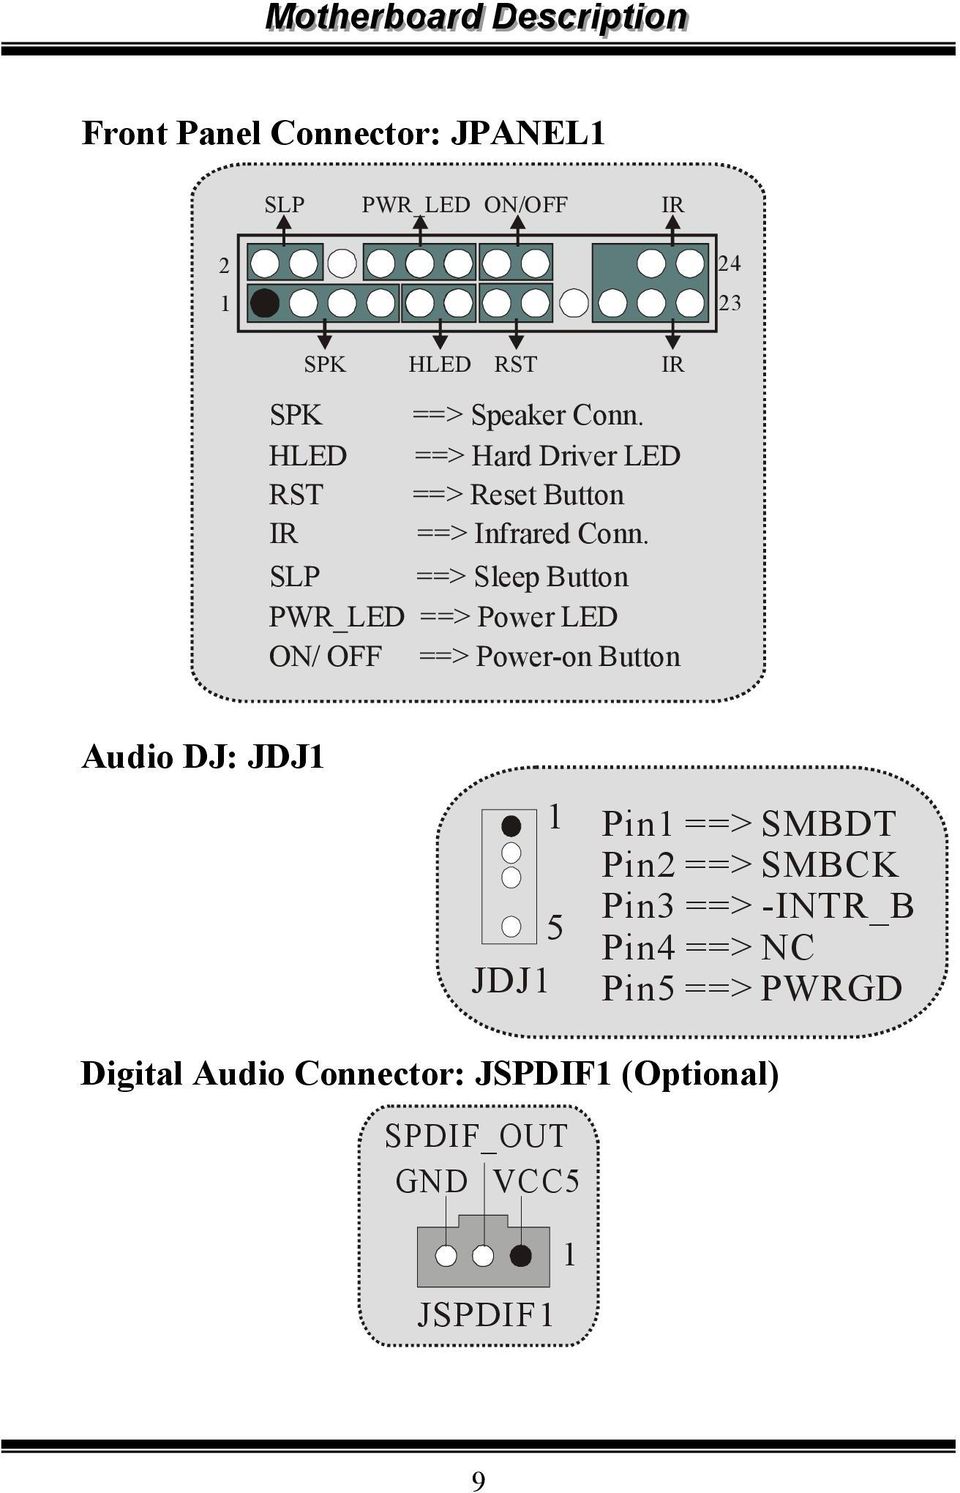 SLP ==> Sleep Button PWR_LED ==> Power LED ON/ OFF ==> Power-on Button Audio DJ: JDJ 5 JDJ Pin ==>